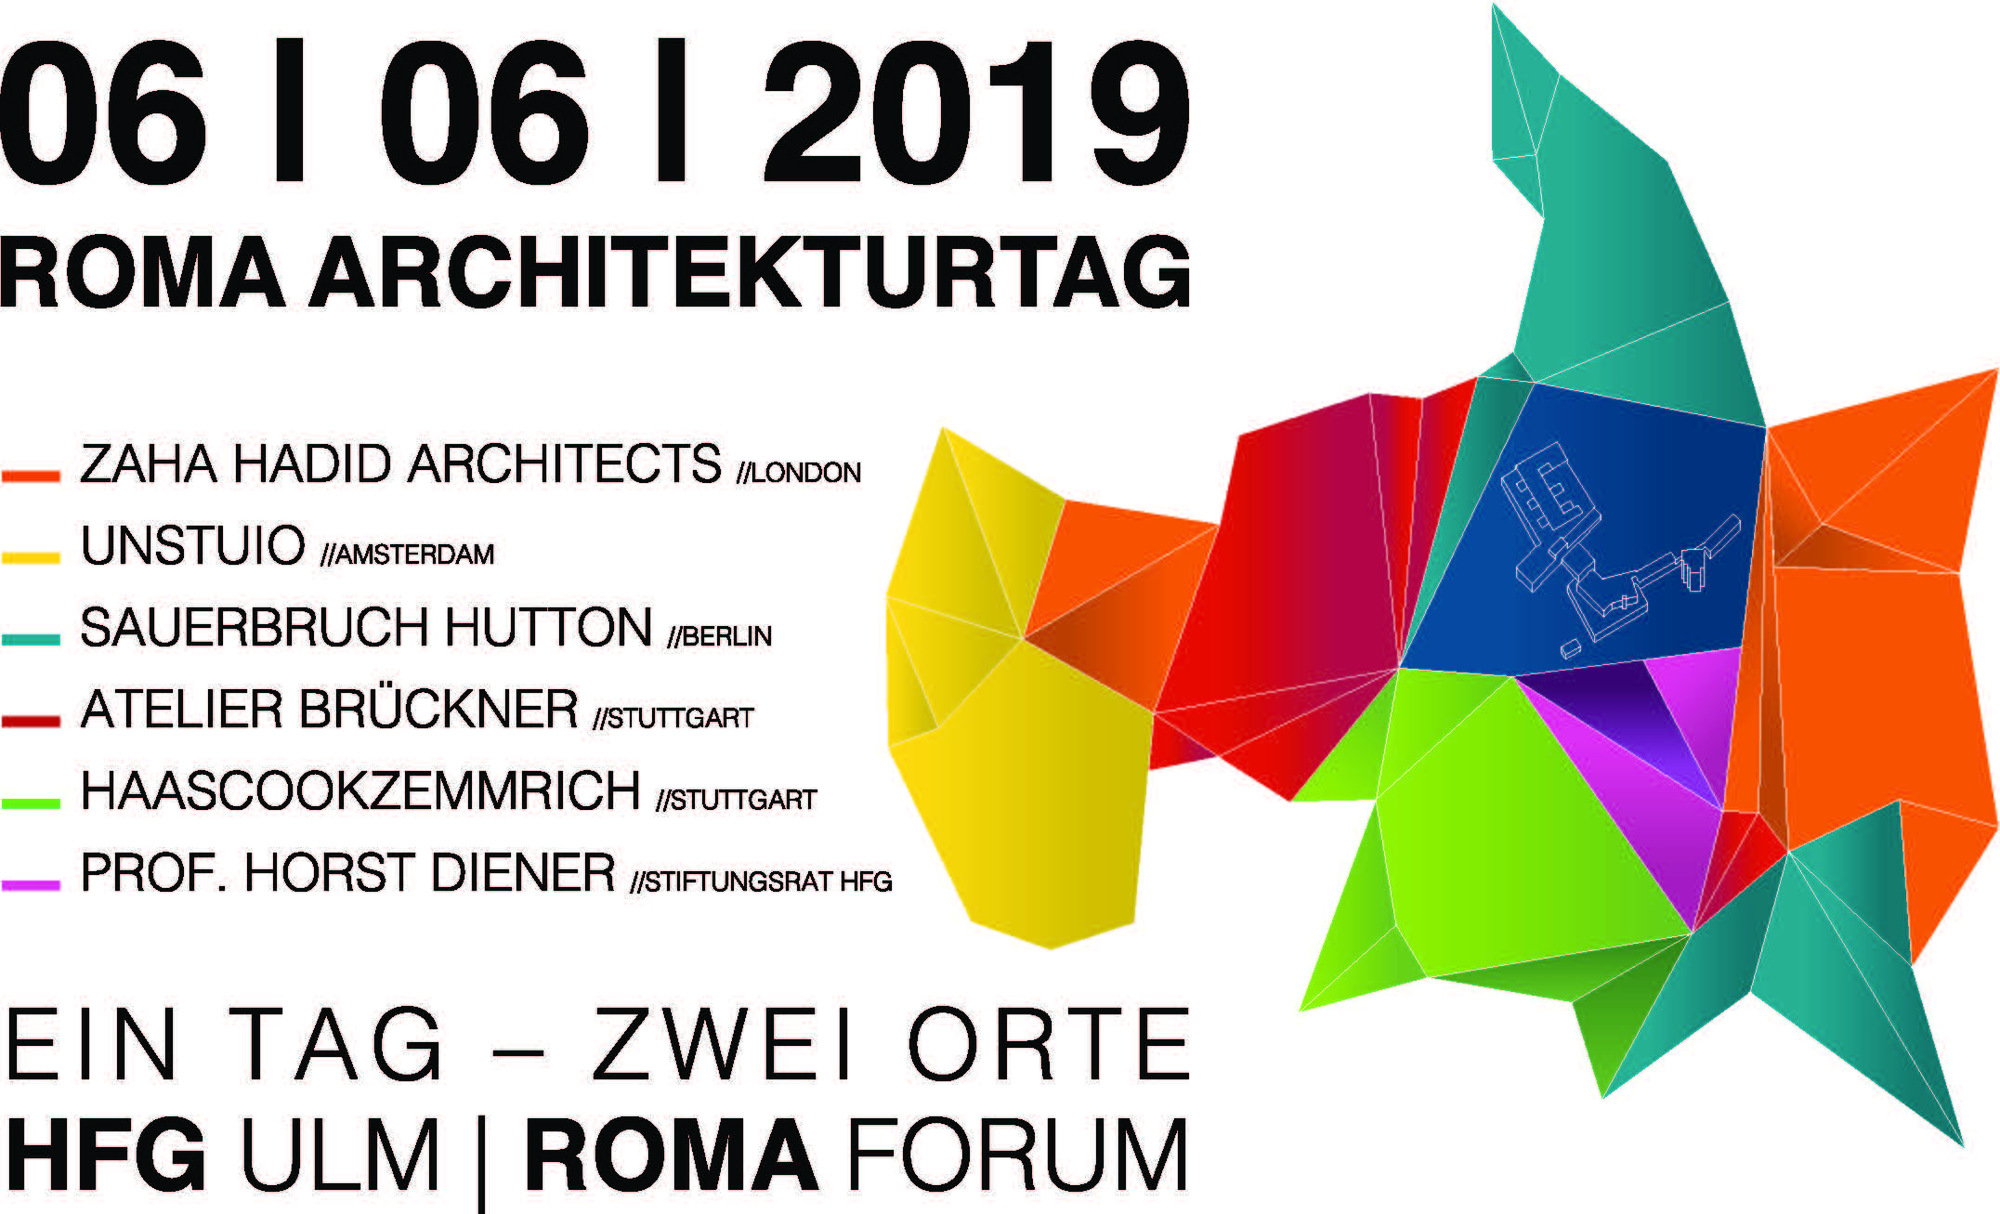 Kristoph Novak discusses Liveable Architecture at ROMA Architekturtag